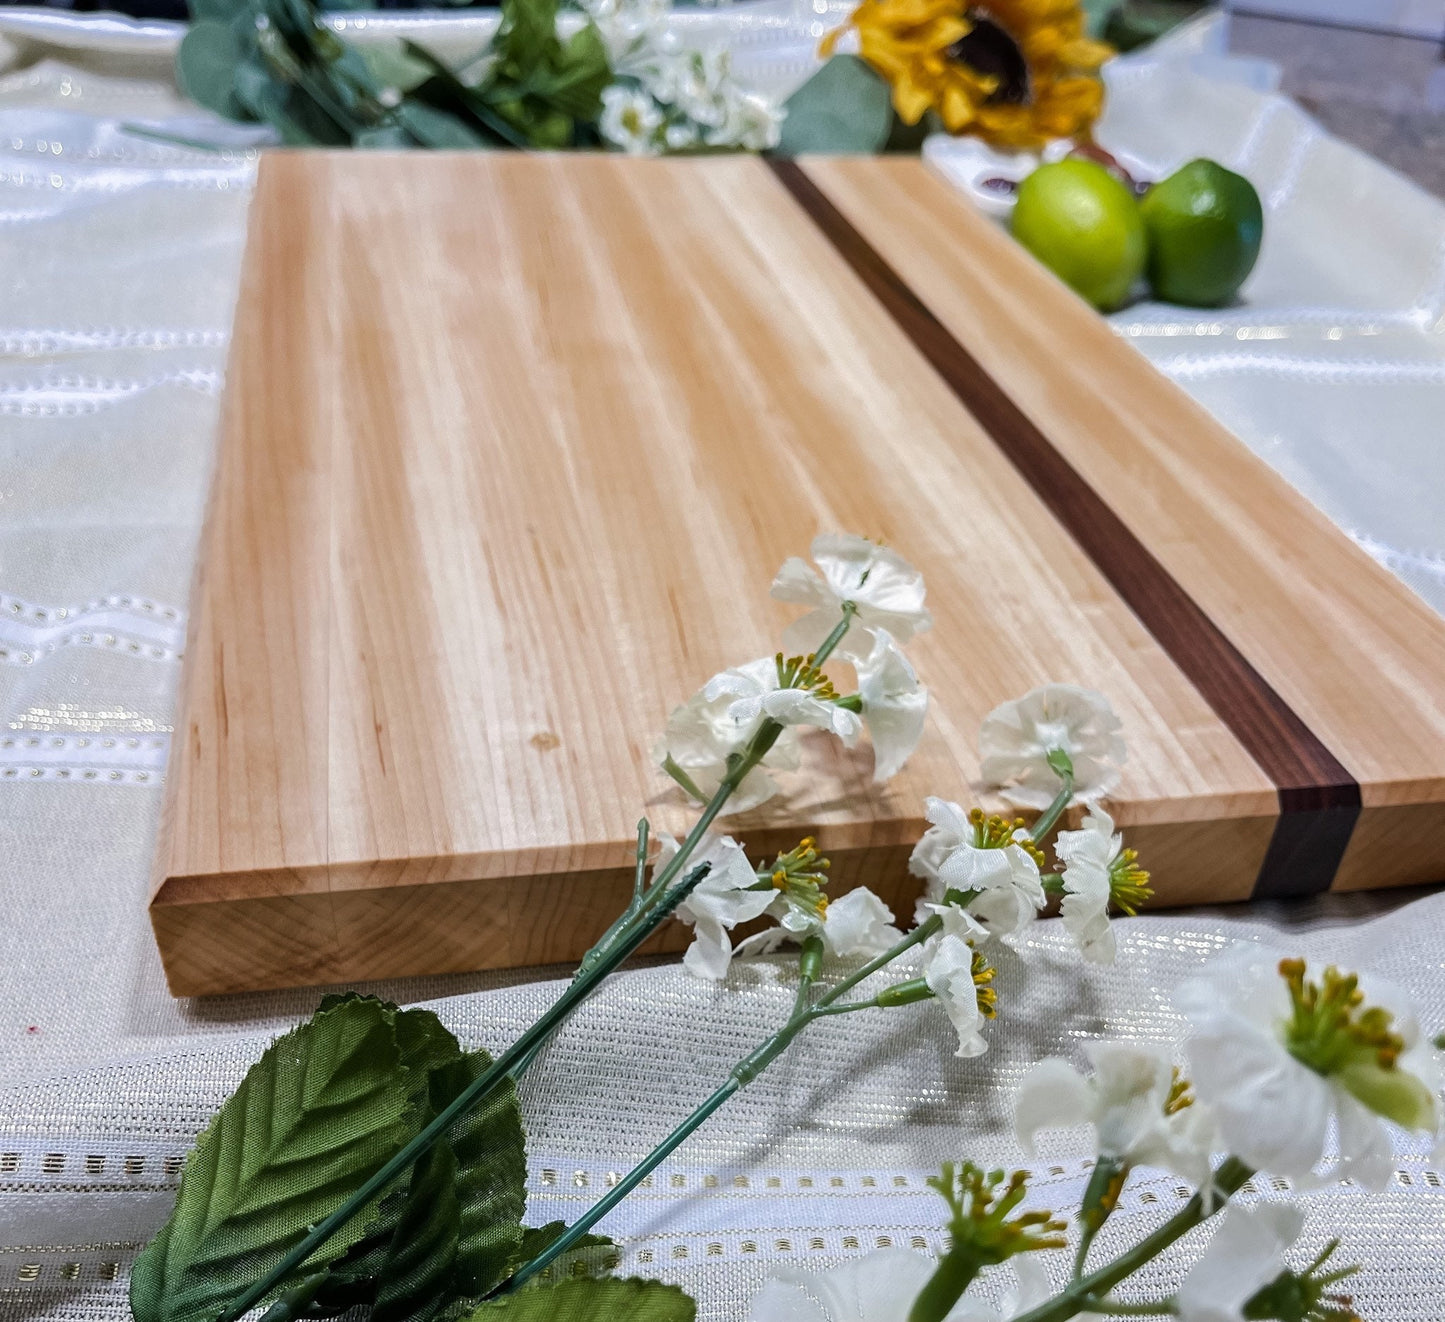 Maple Cutting board/cutting board/chopping block/serving tray/charcuterie/hardwood cutting board